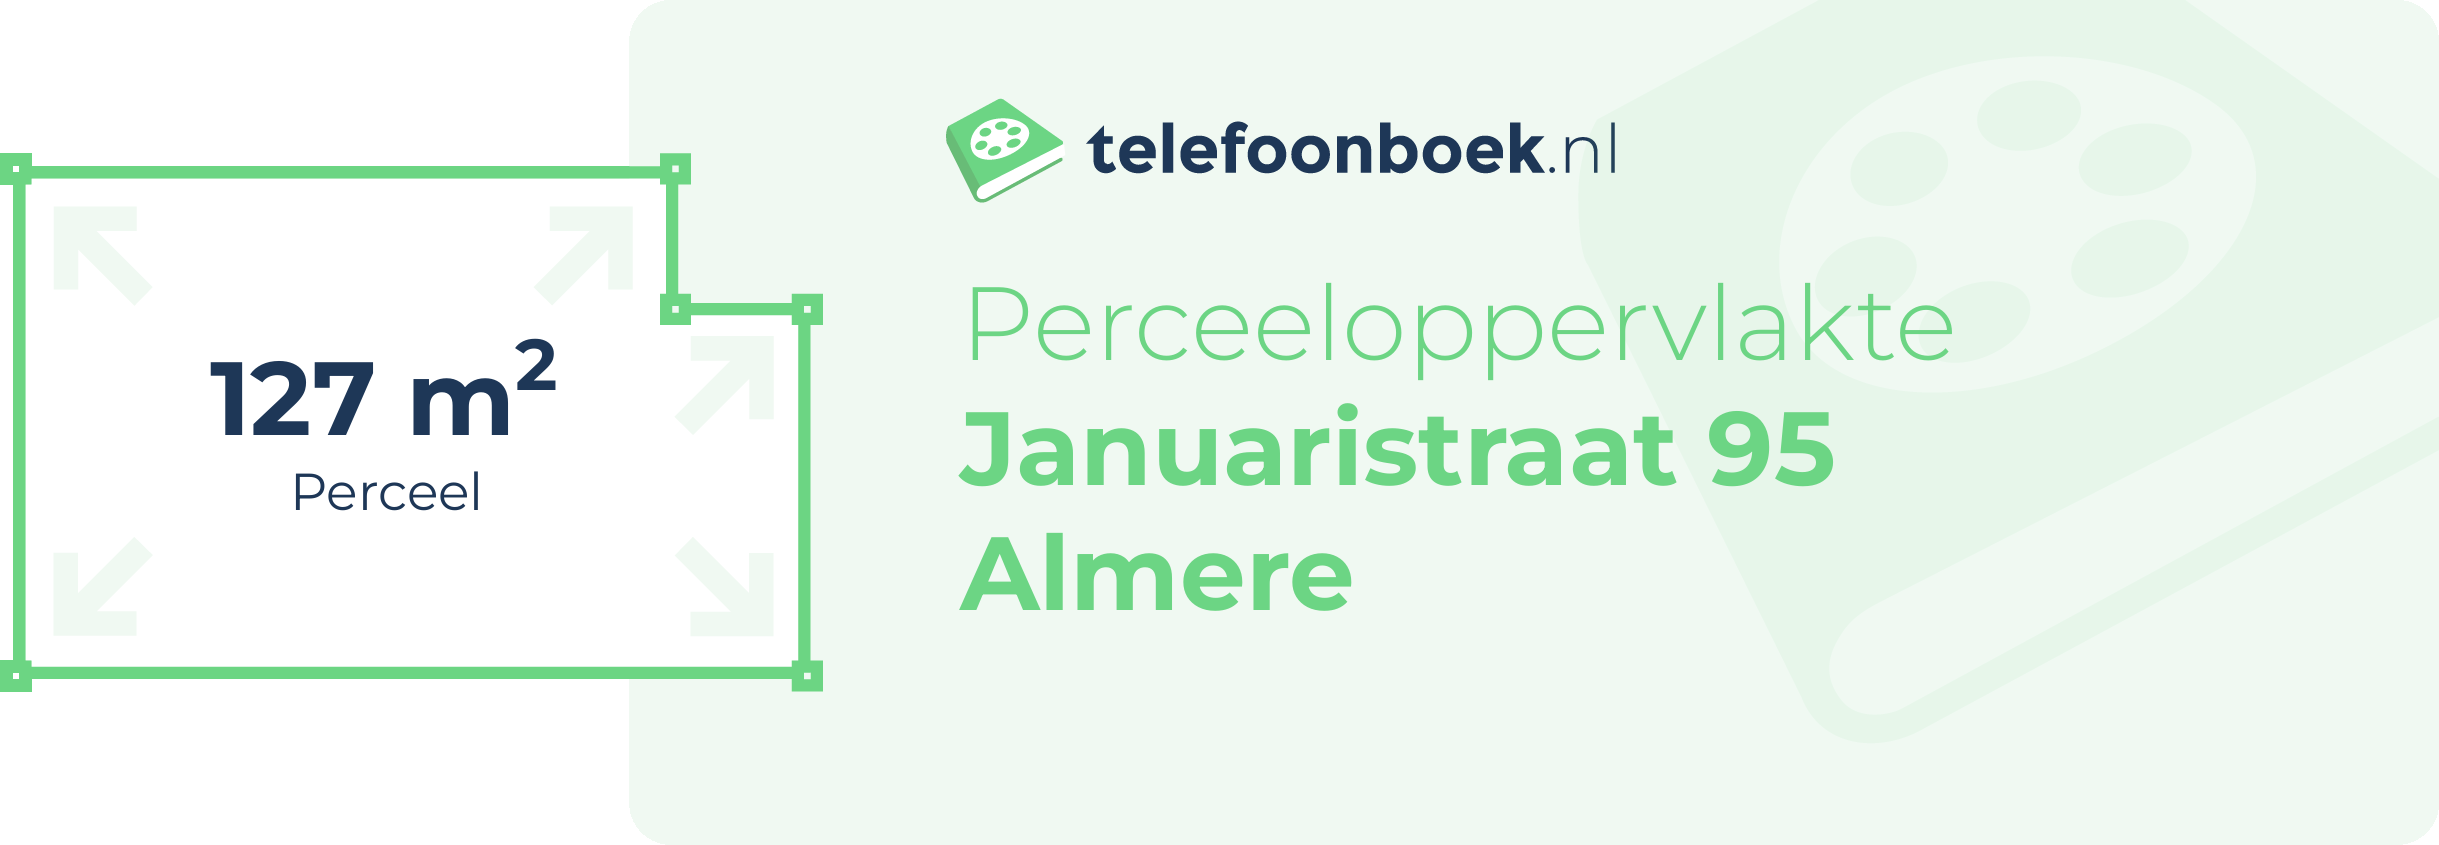 Perceeloppervlakte Januaristraat 95 Almere